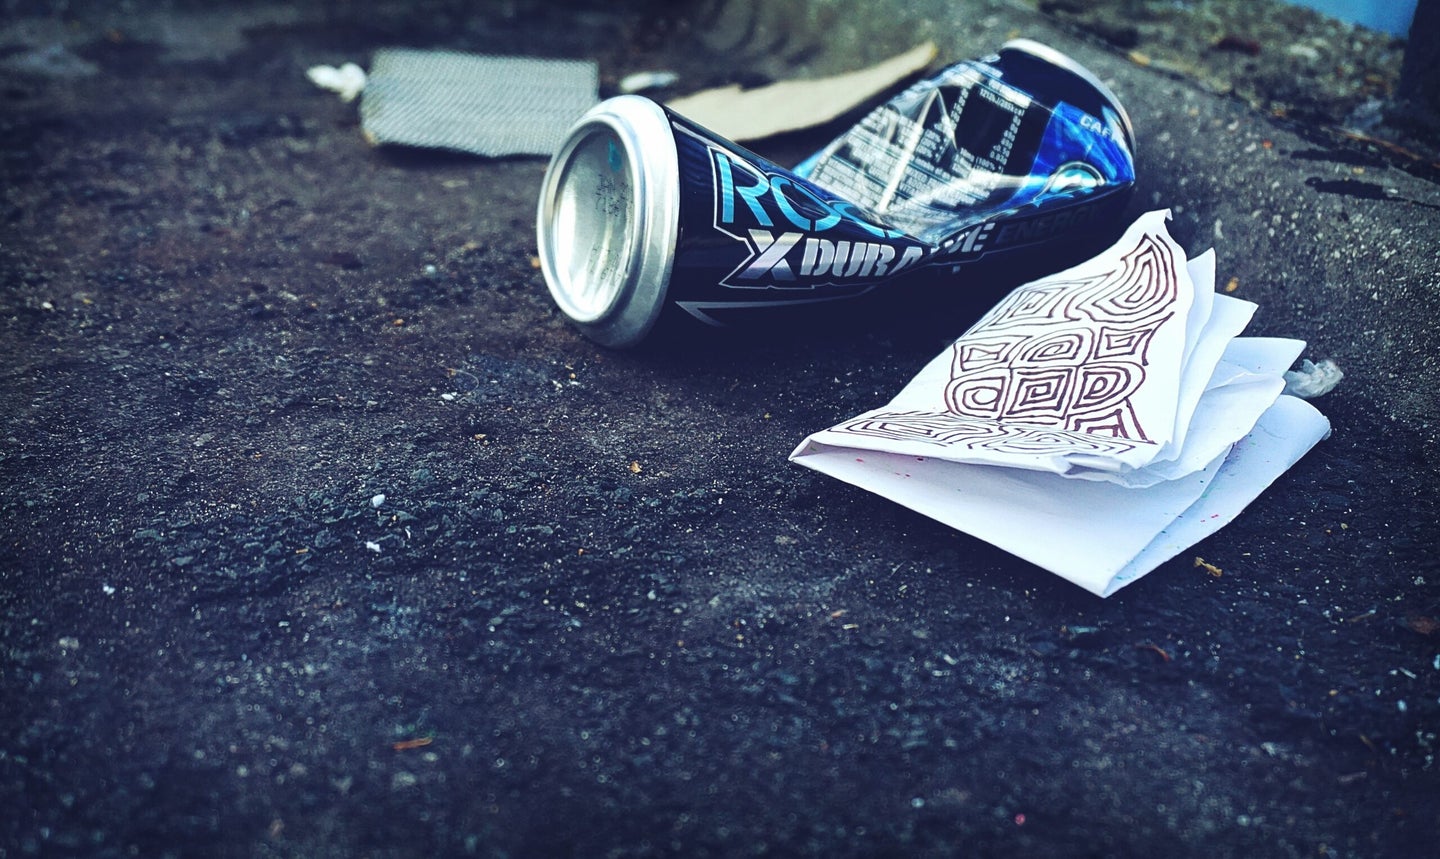 Street with trash, drink bottle, paper.